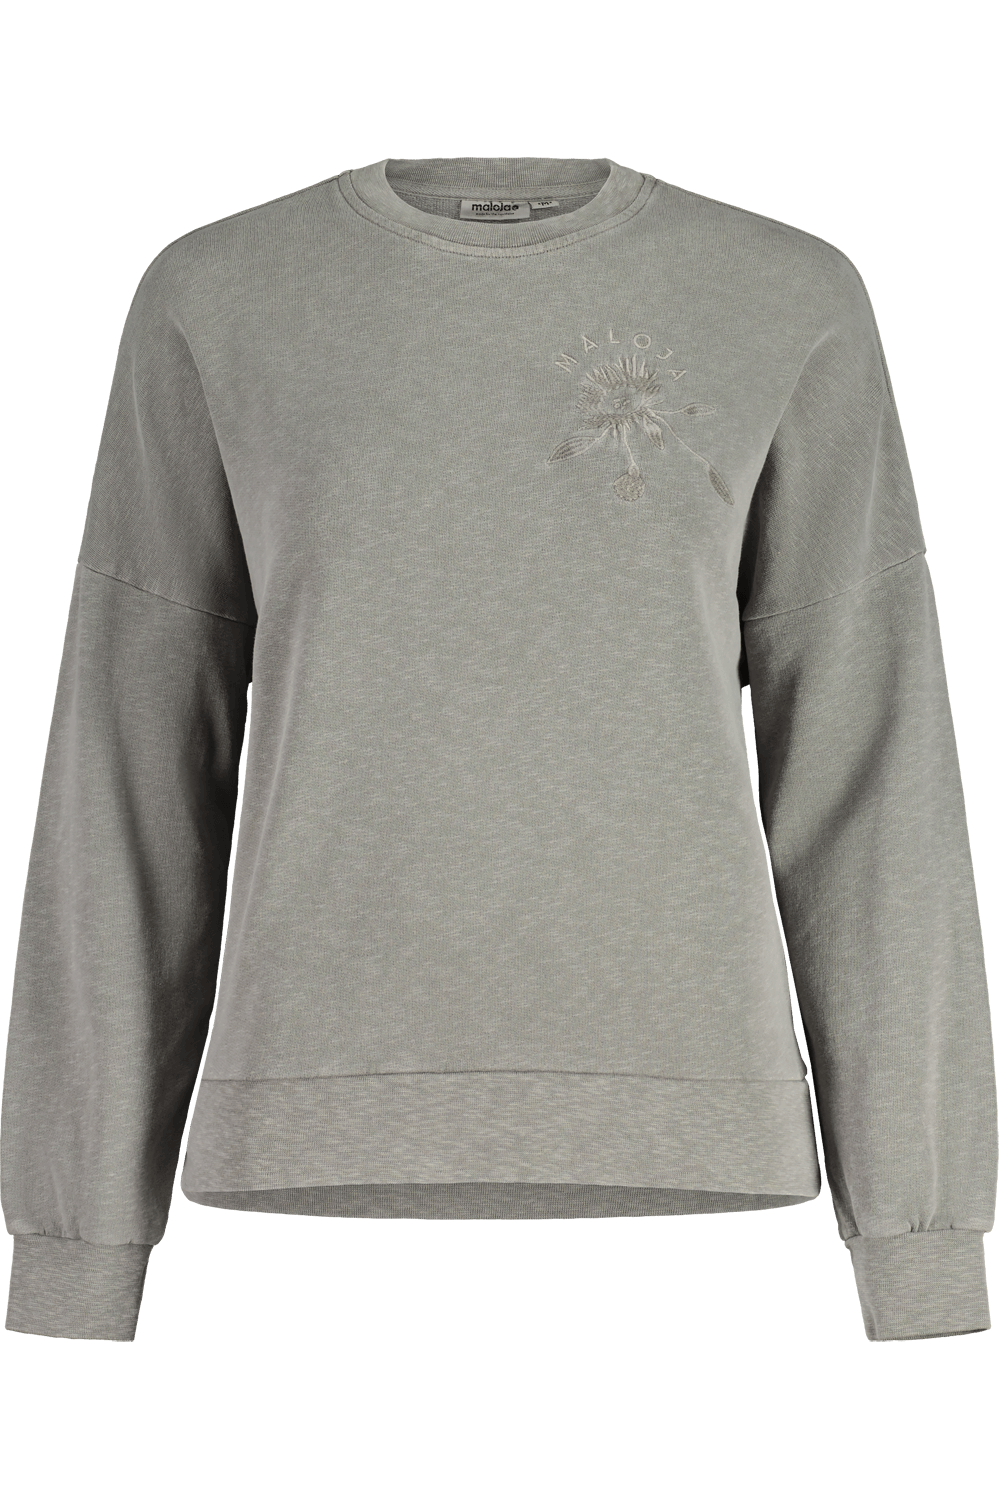 Maloja - W's VurzaM. Natural Dye Sweatshirt - 100% Organic Cotton - Weekendbee - sustainable sportswear